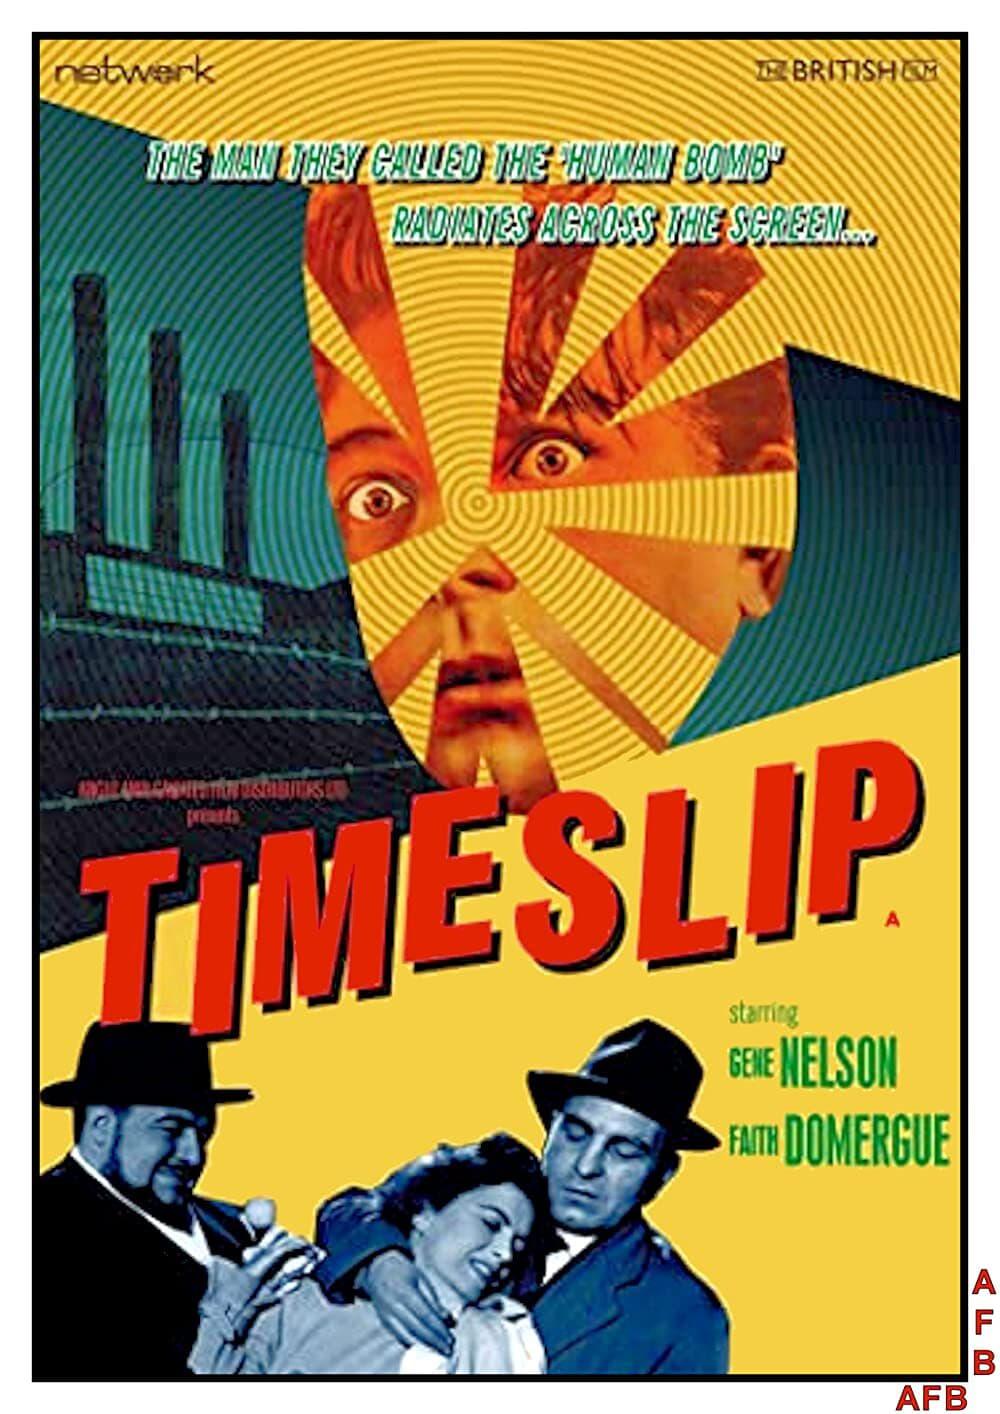 Timeslip poster